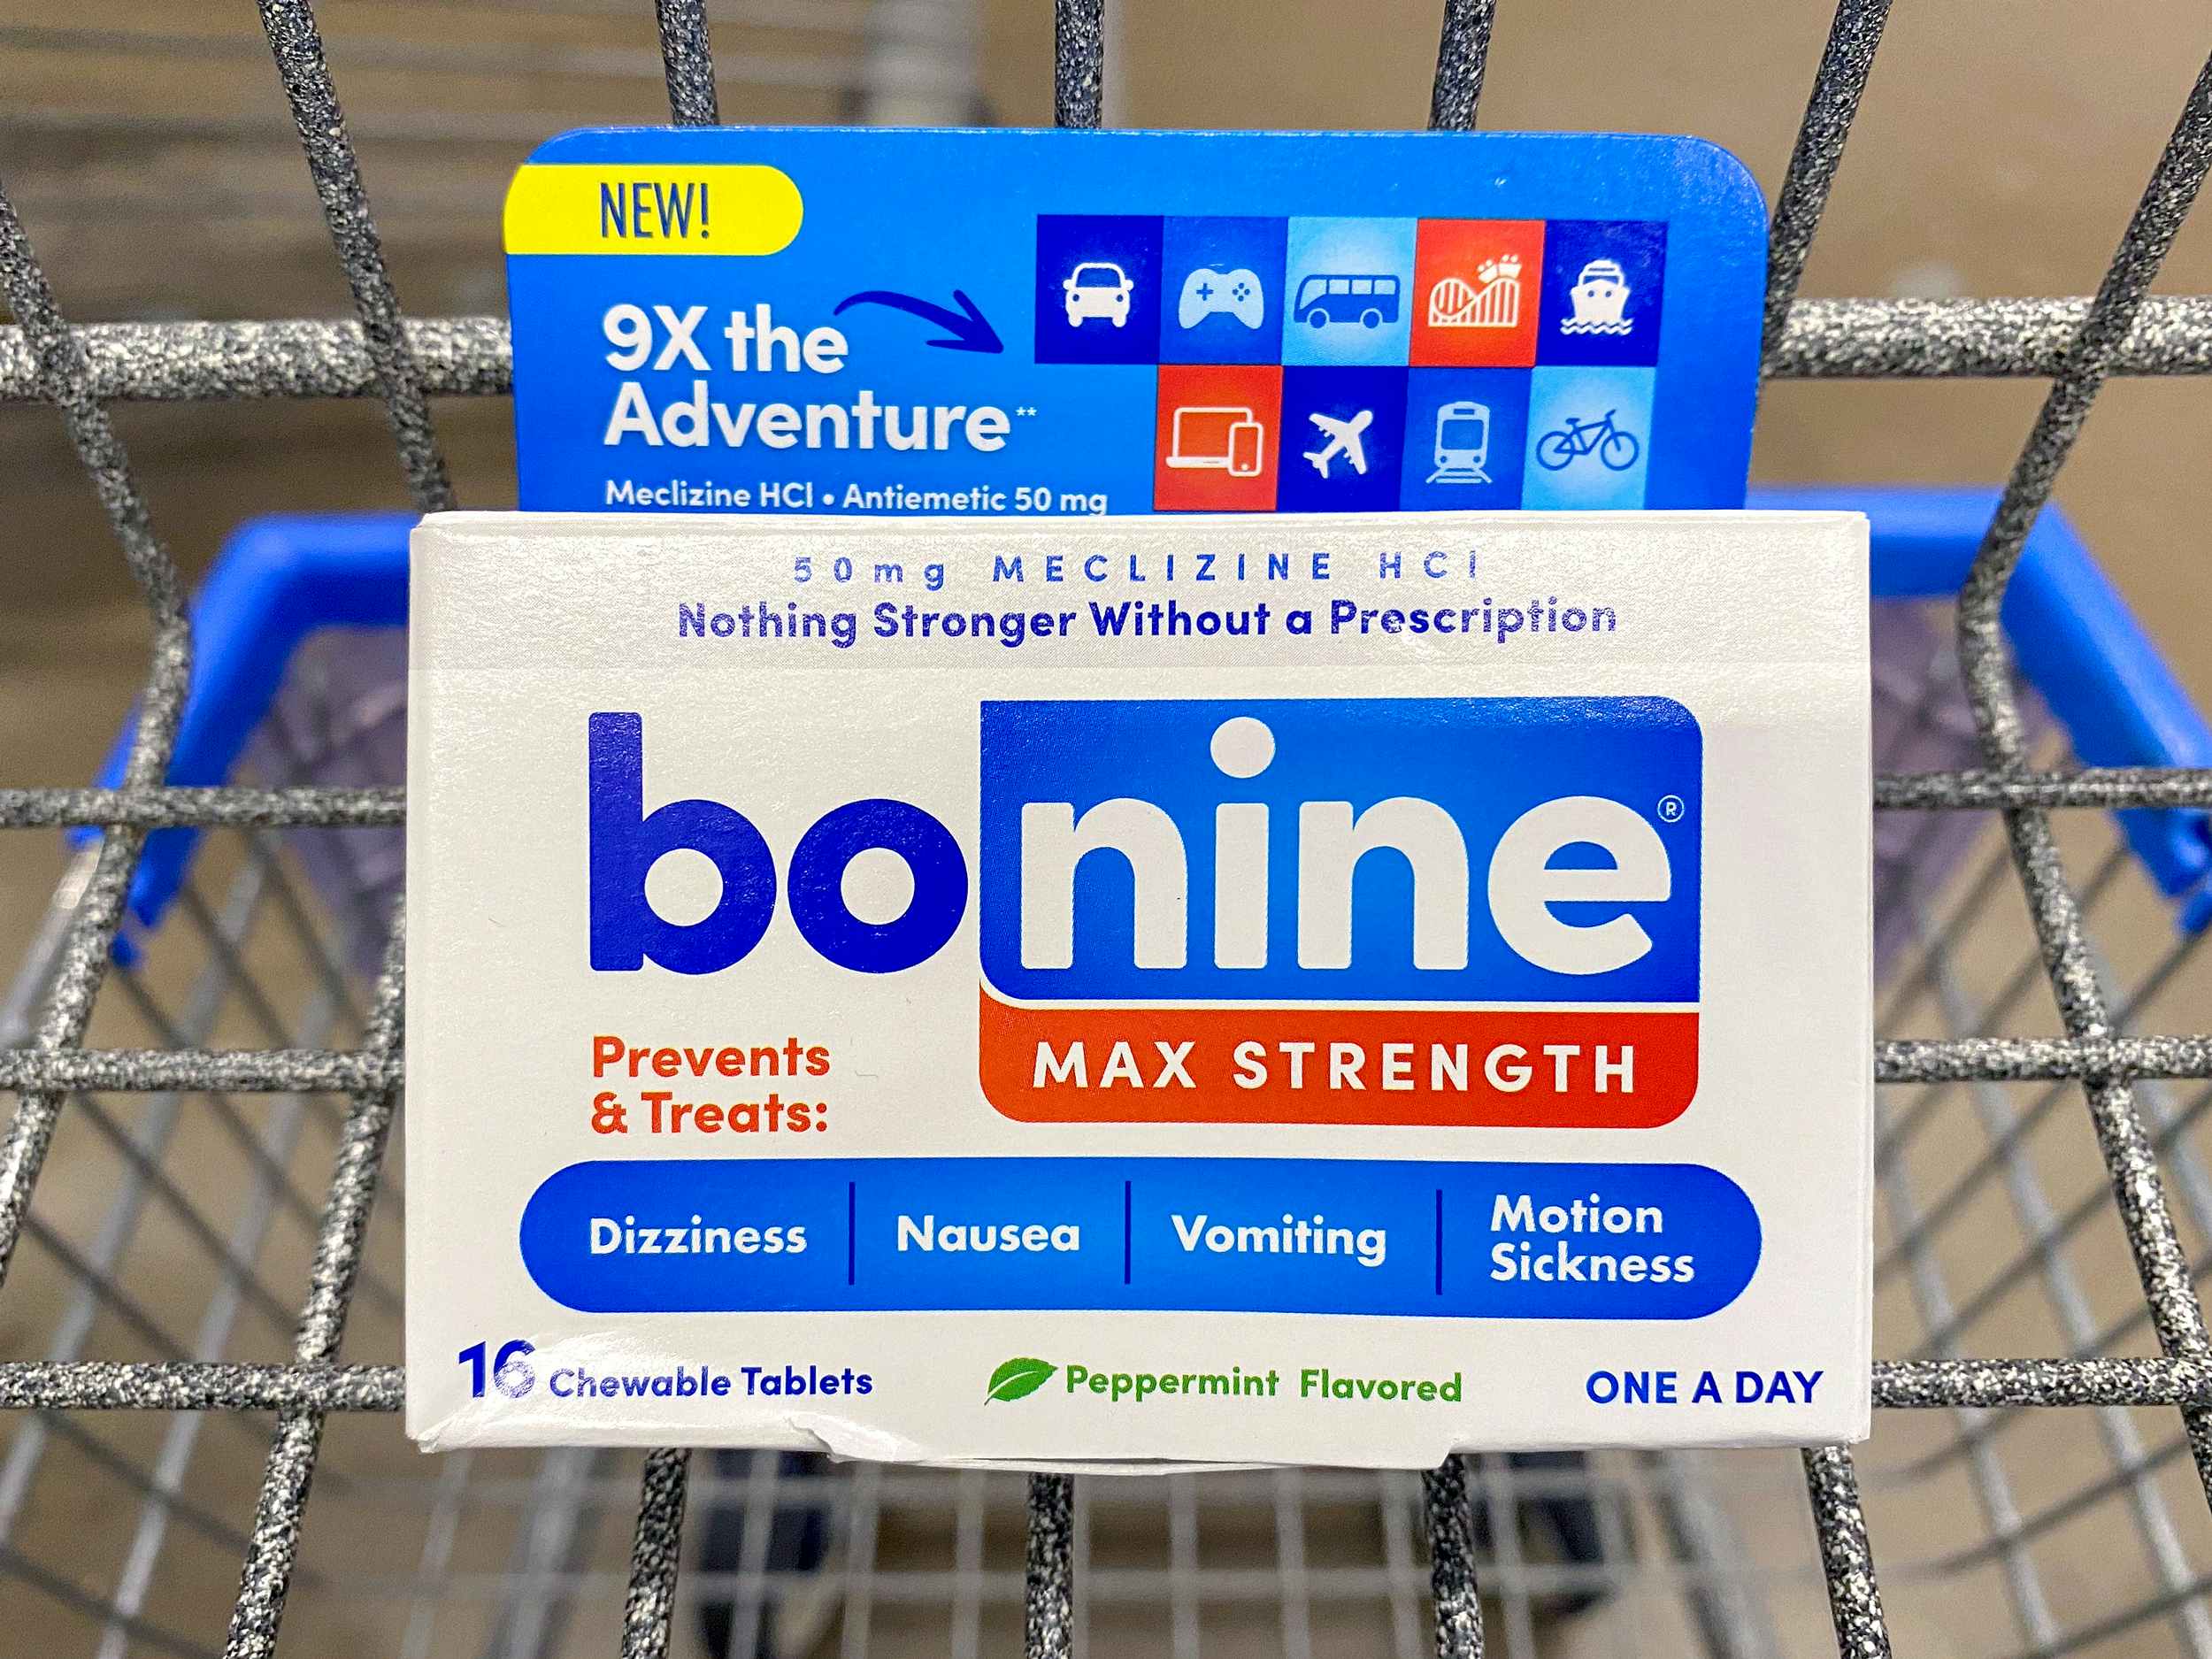 bonine meclizine max strength in walmart shopping cart